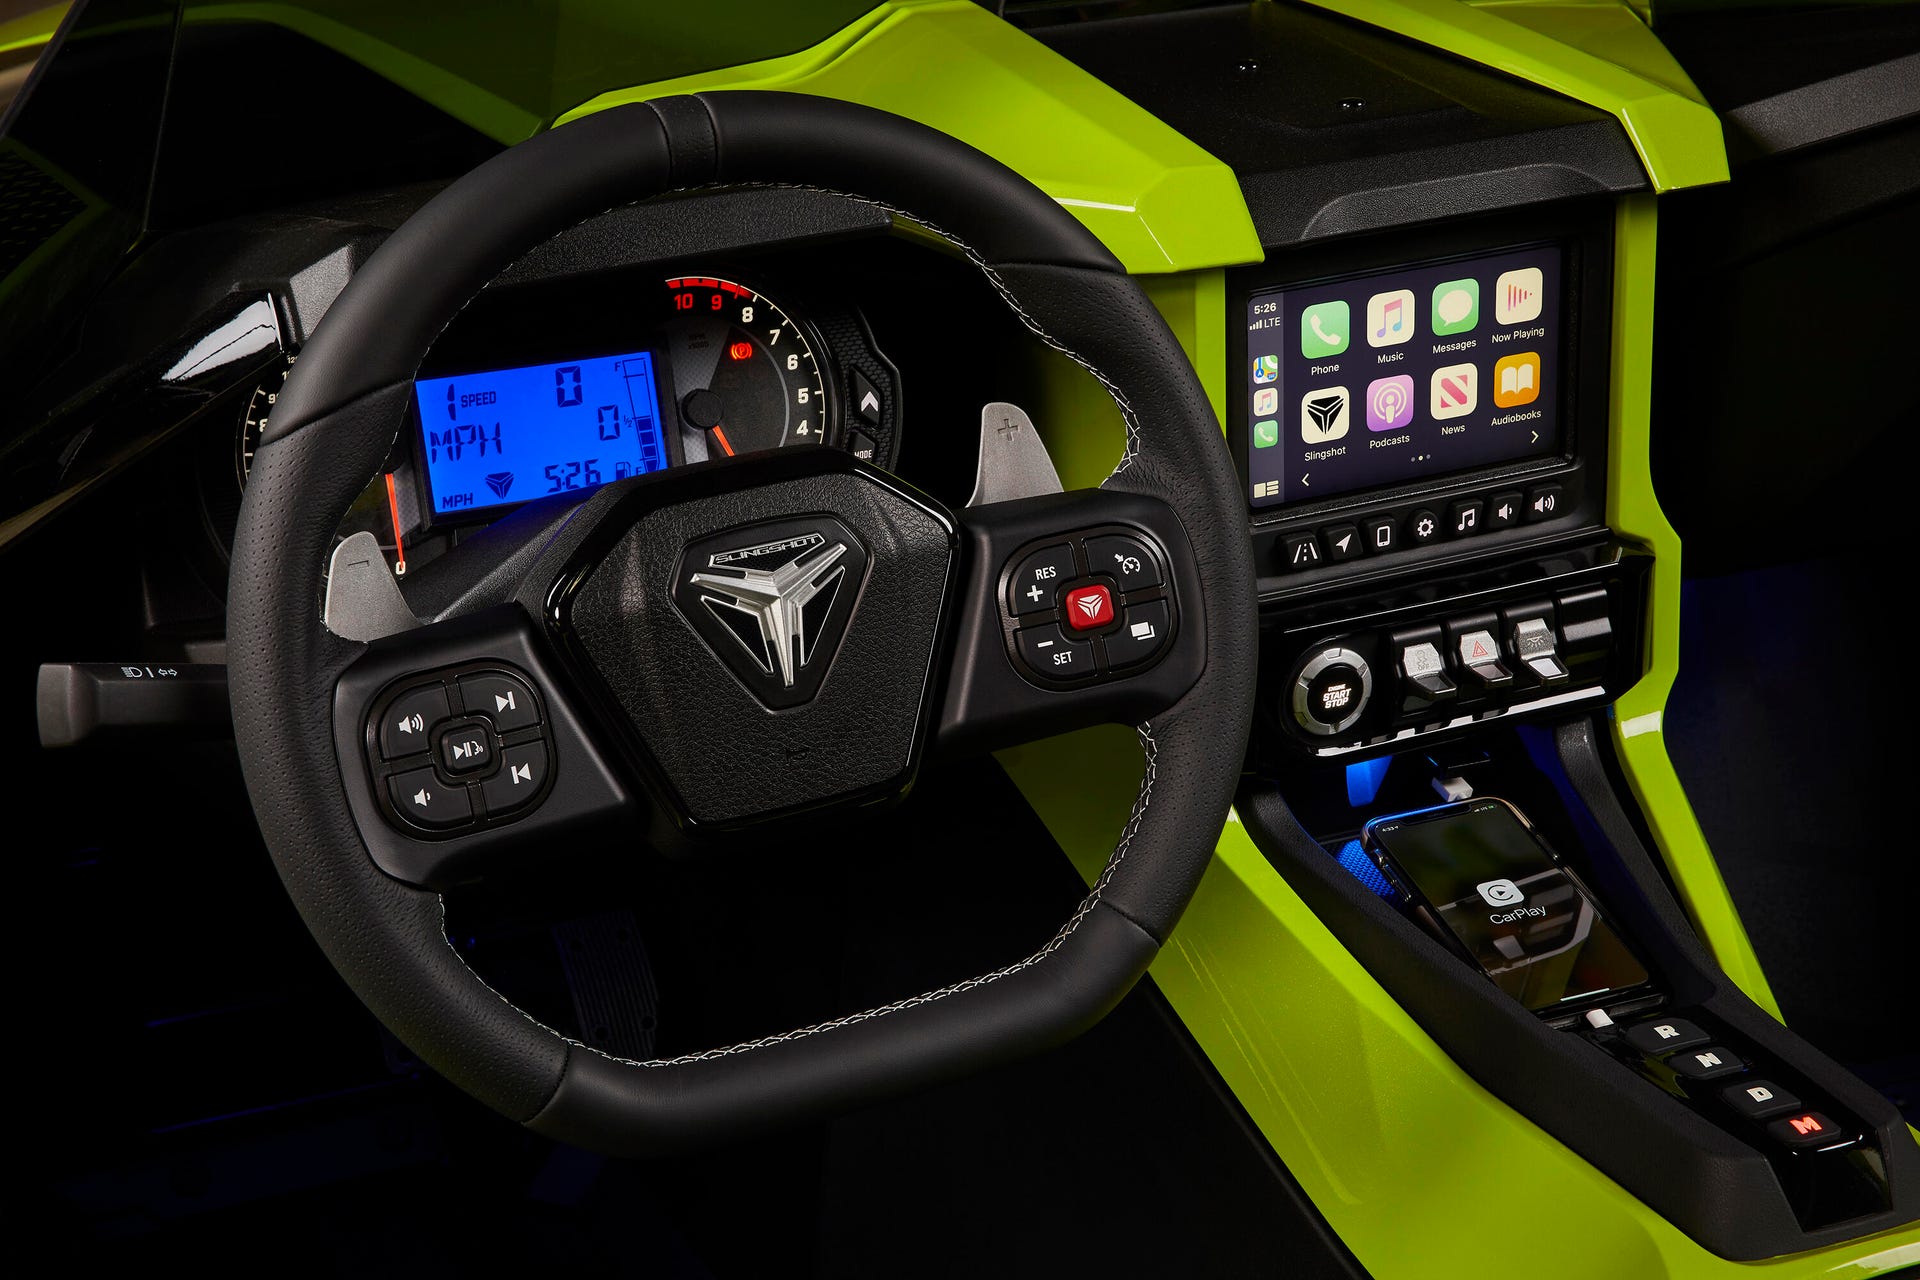 2021 Polaris Slingshot interior with Apple CarPlay